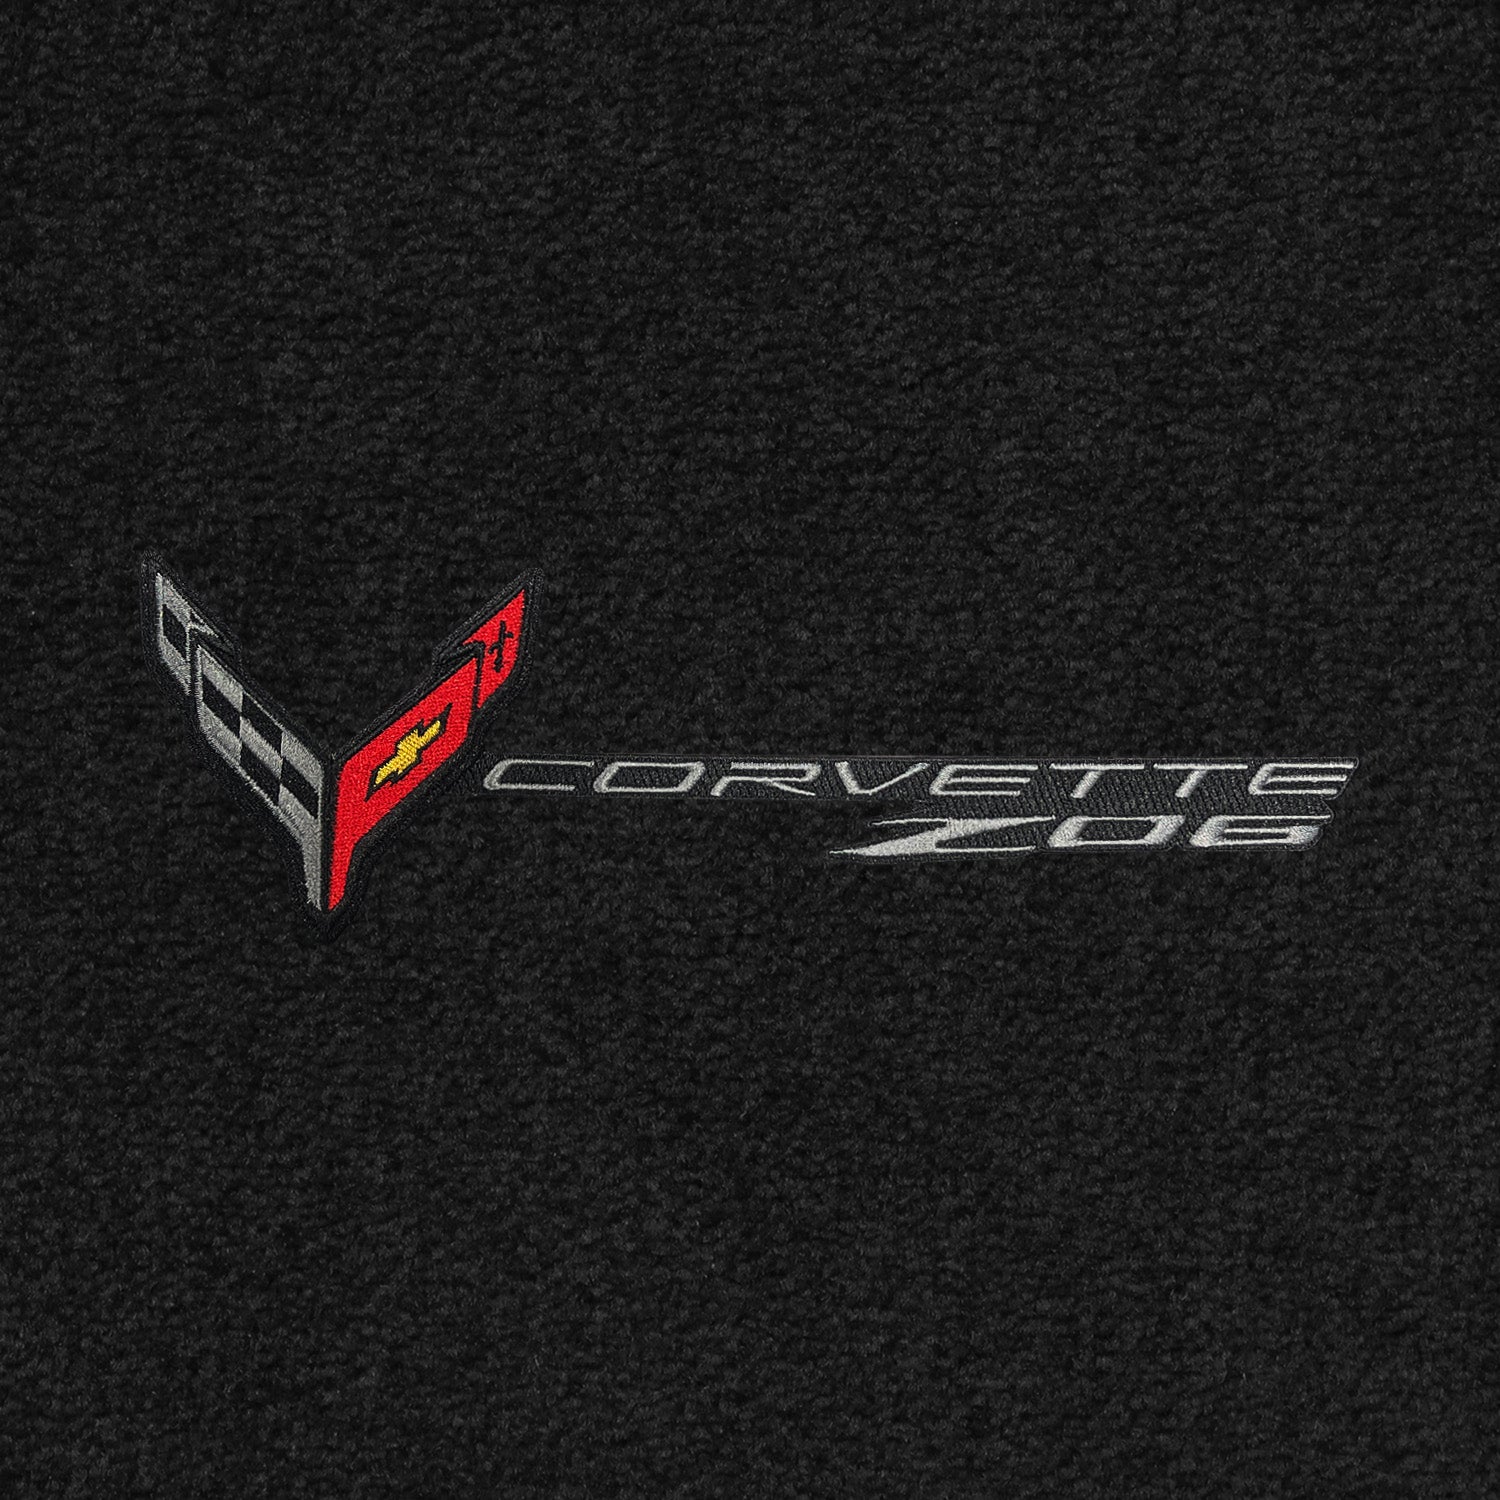 C8/Z06 Corvette Floor Mats - Lloyds Mats With Flags, Corvette Script And Z06 Logo Combo